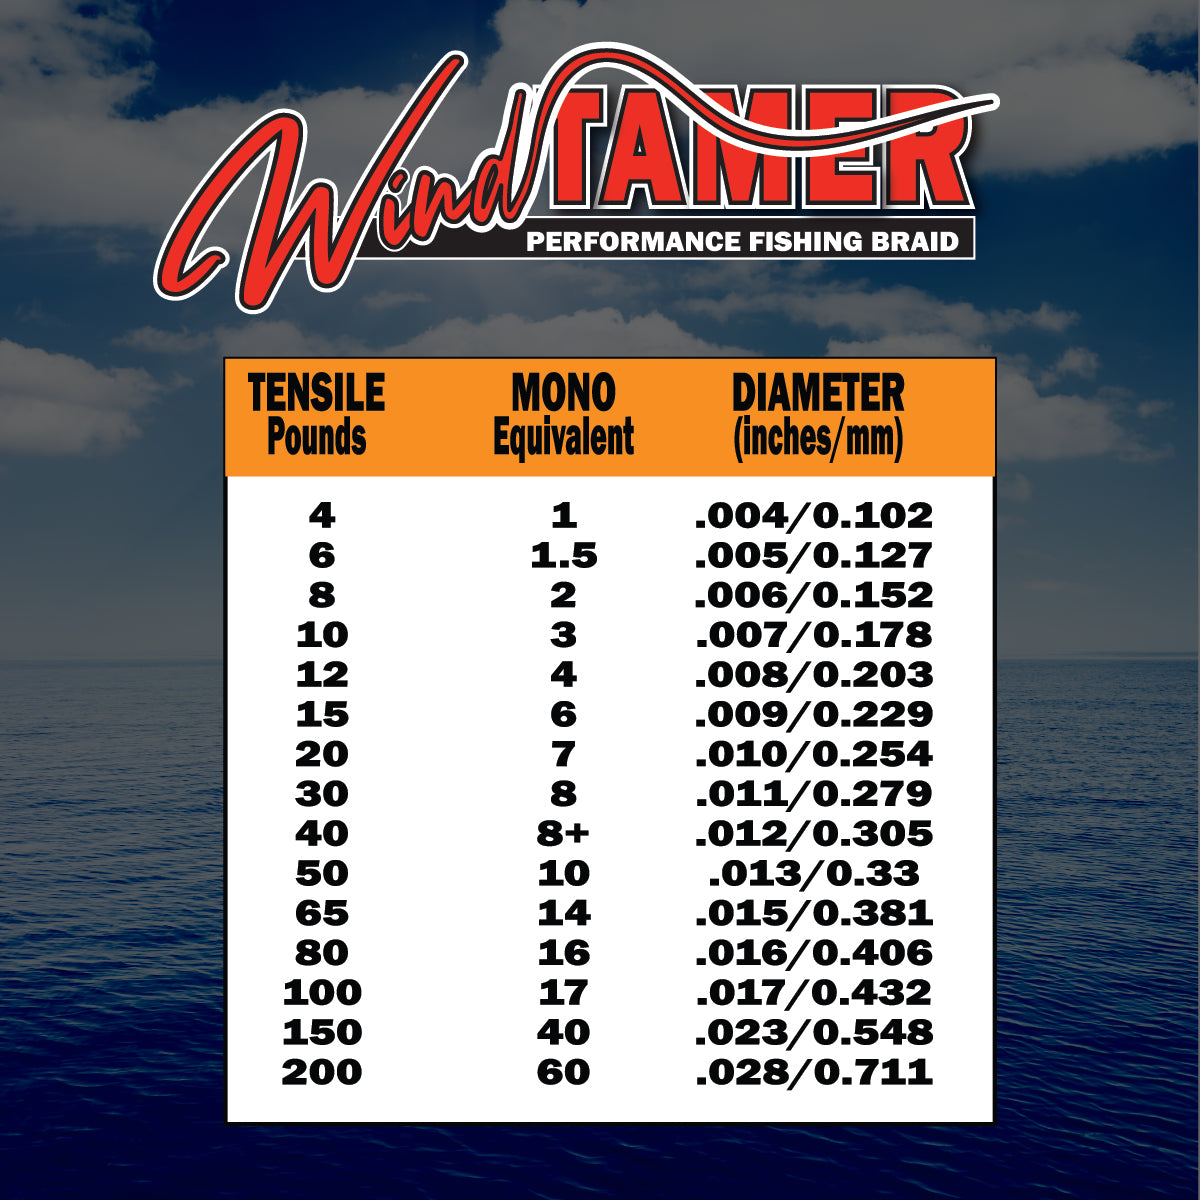 Windtamer braid fishing line tensile mono equivalent diameter chart.